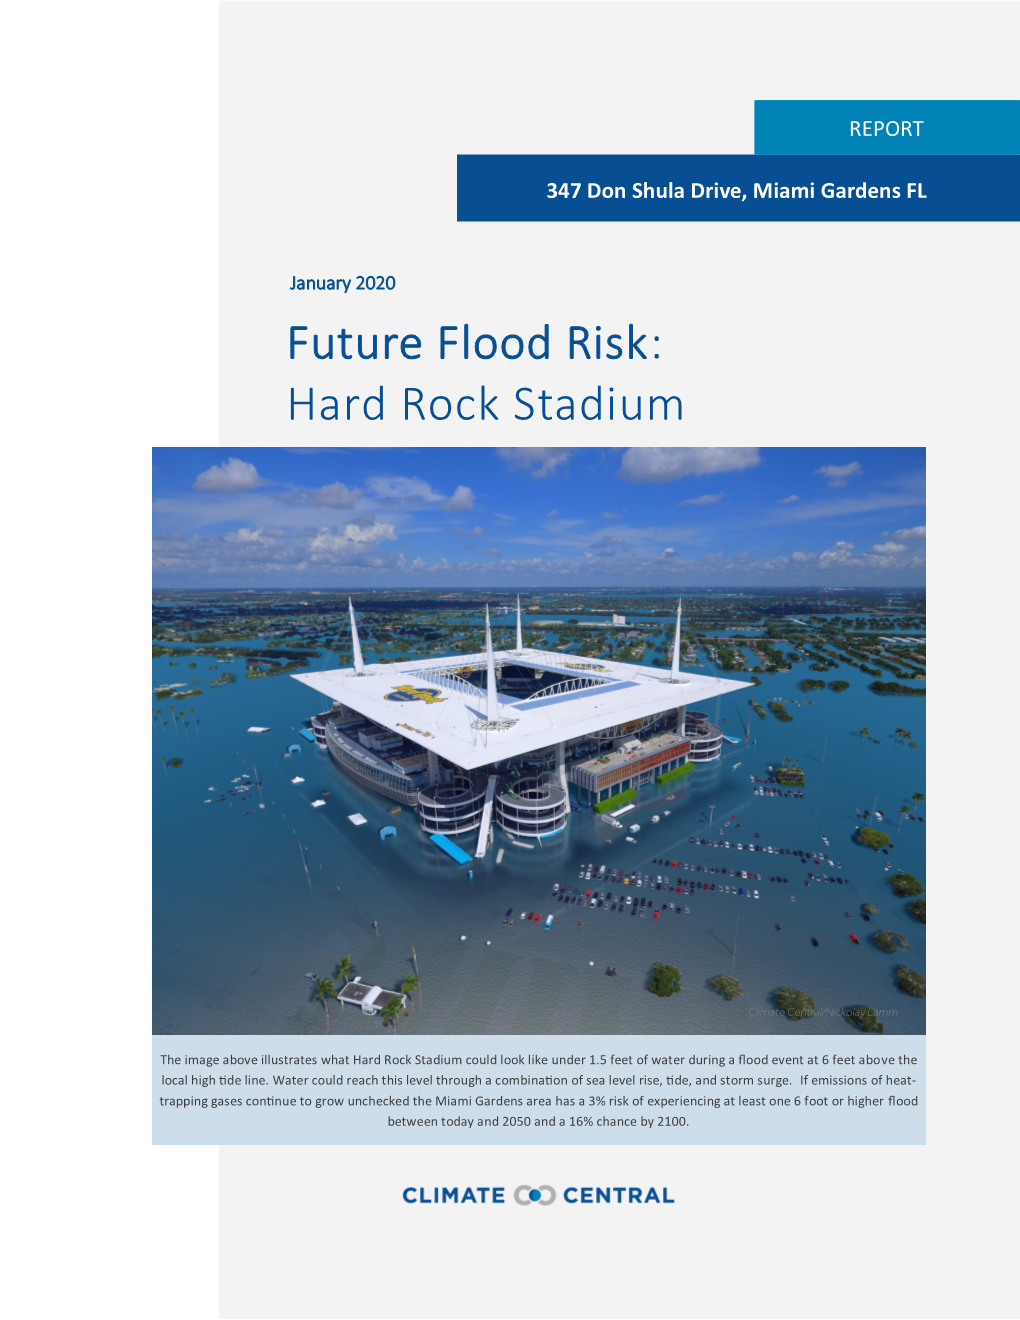 Future Flood Risk: Hard Rock Stadium